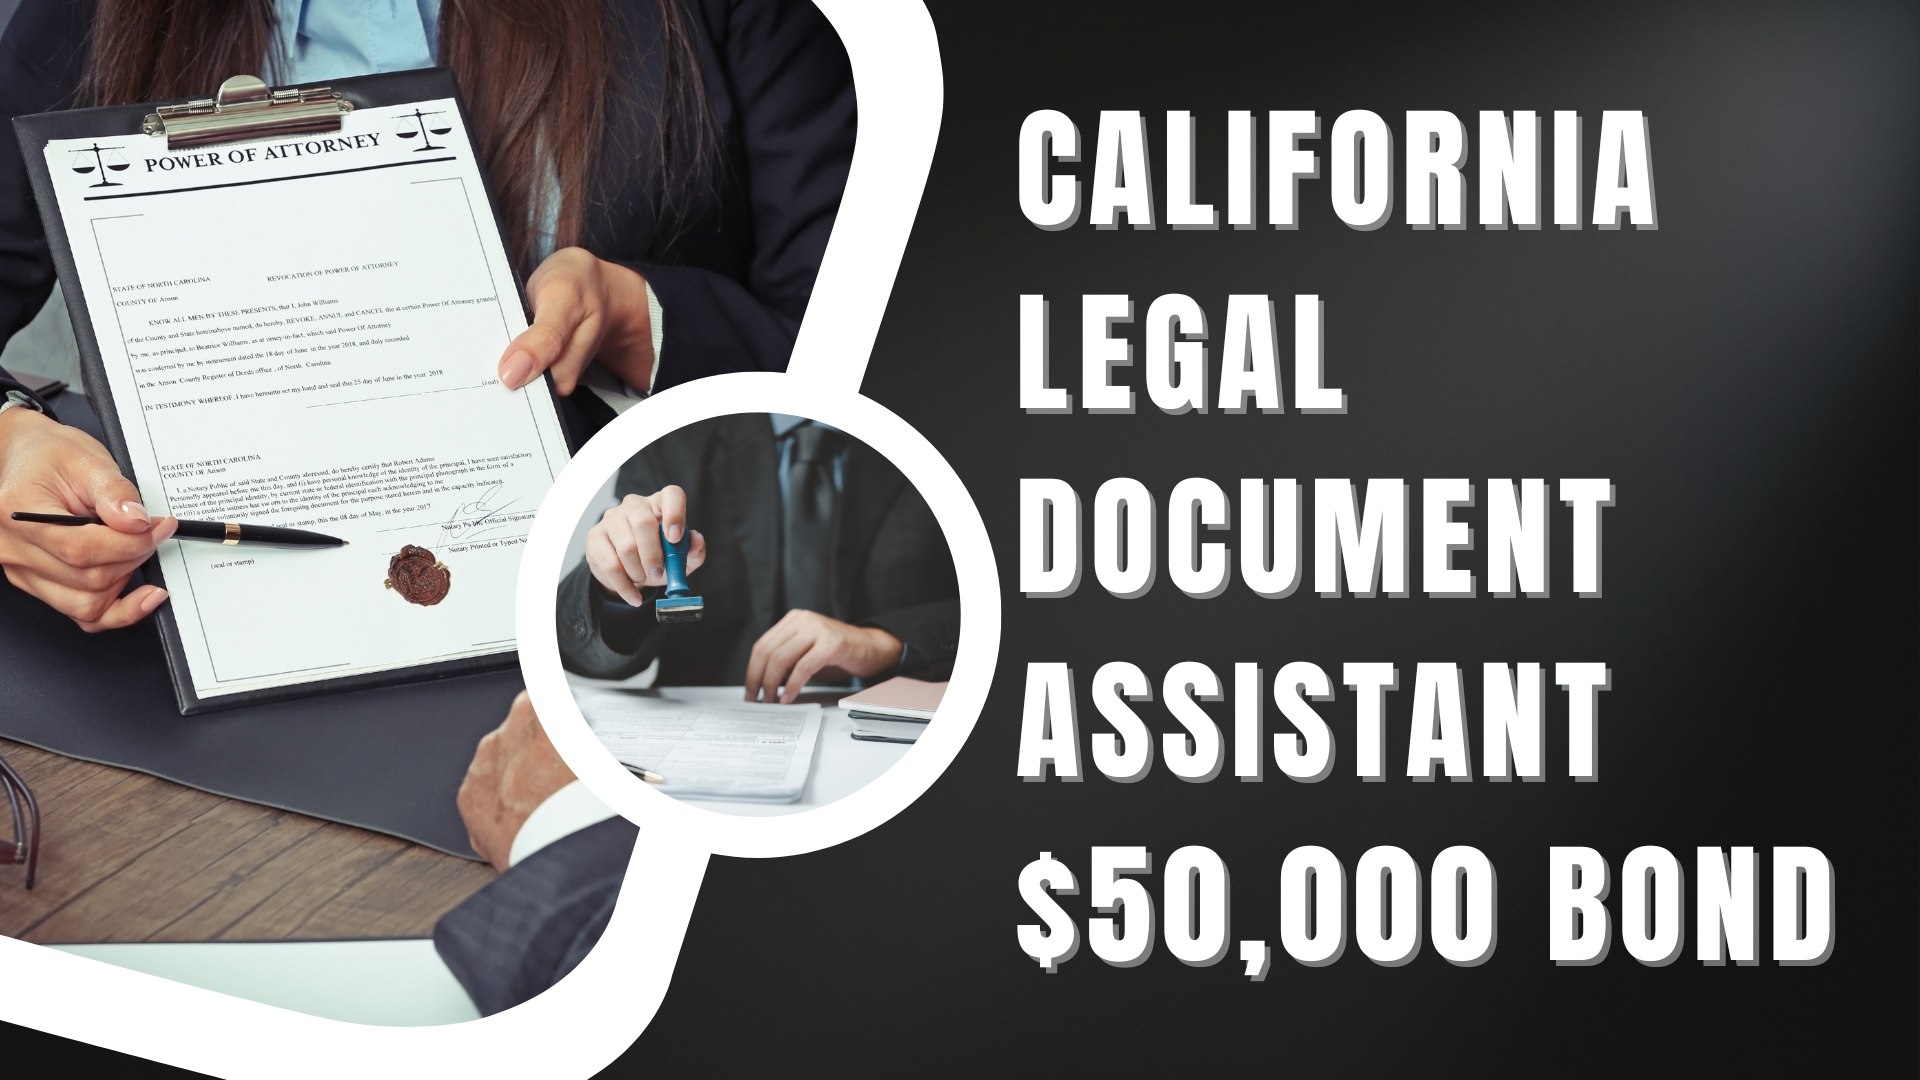 Surety Bond-California Legal Document Assistant $50,000 Bond